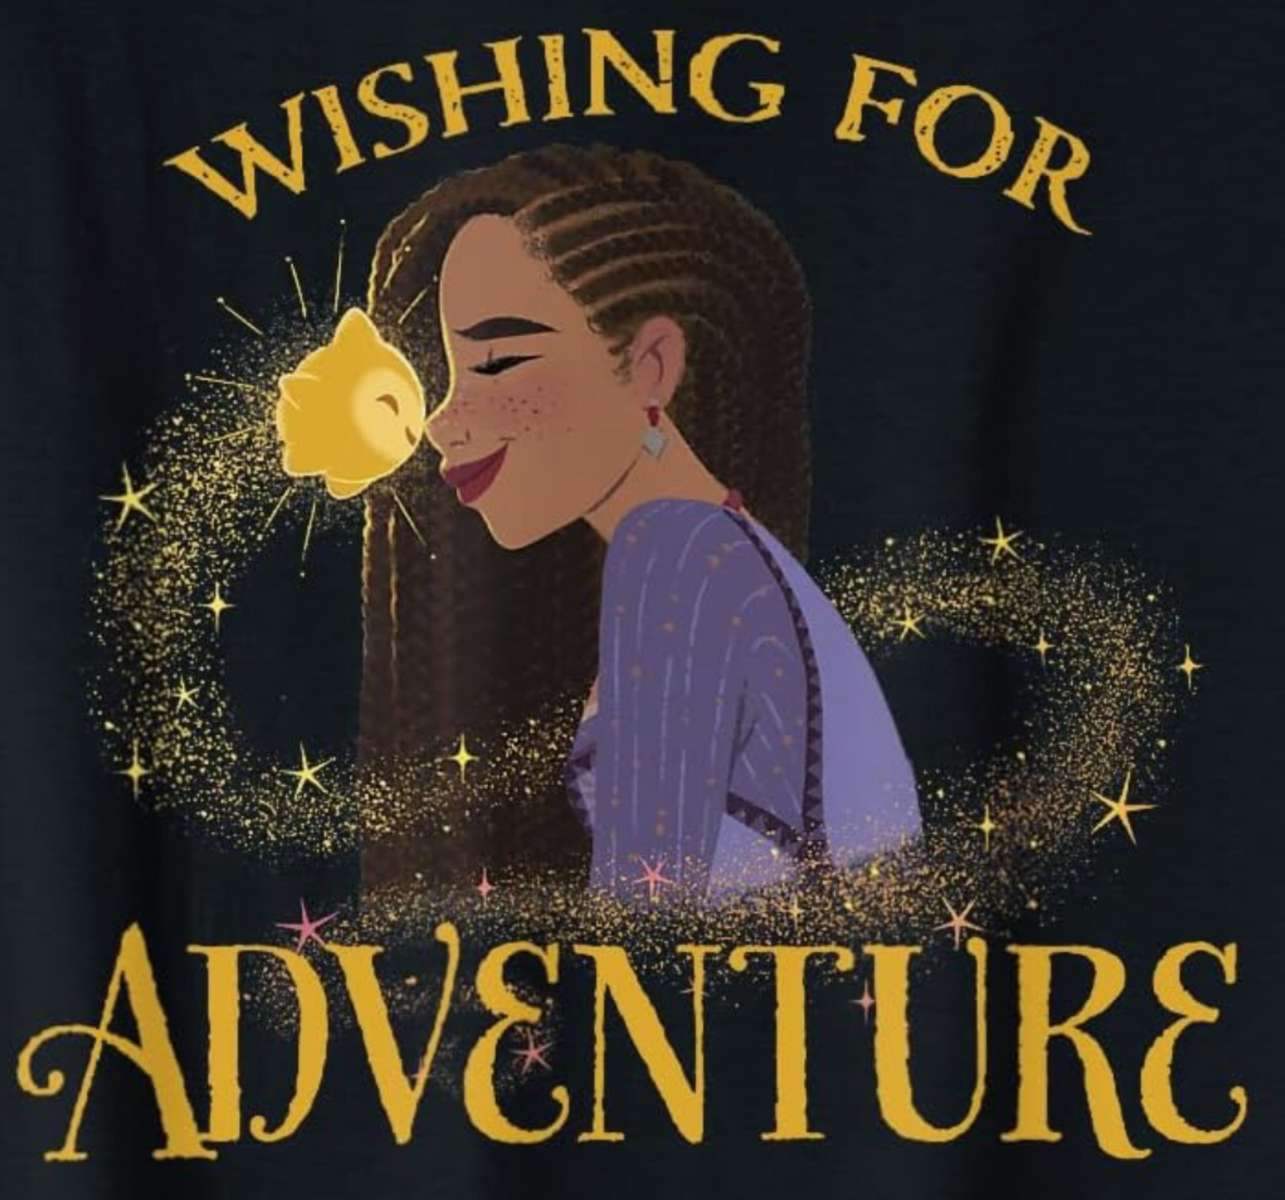 Asha и Star Wishing For Adventure Magical Duo онлайн пъзел